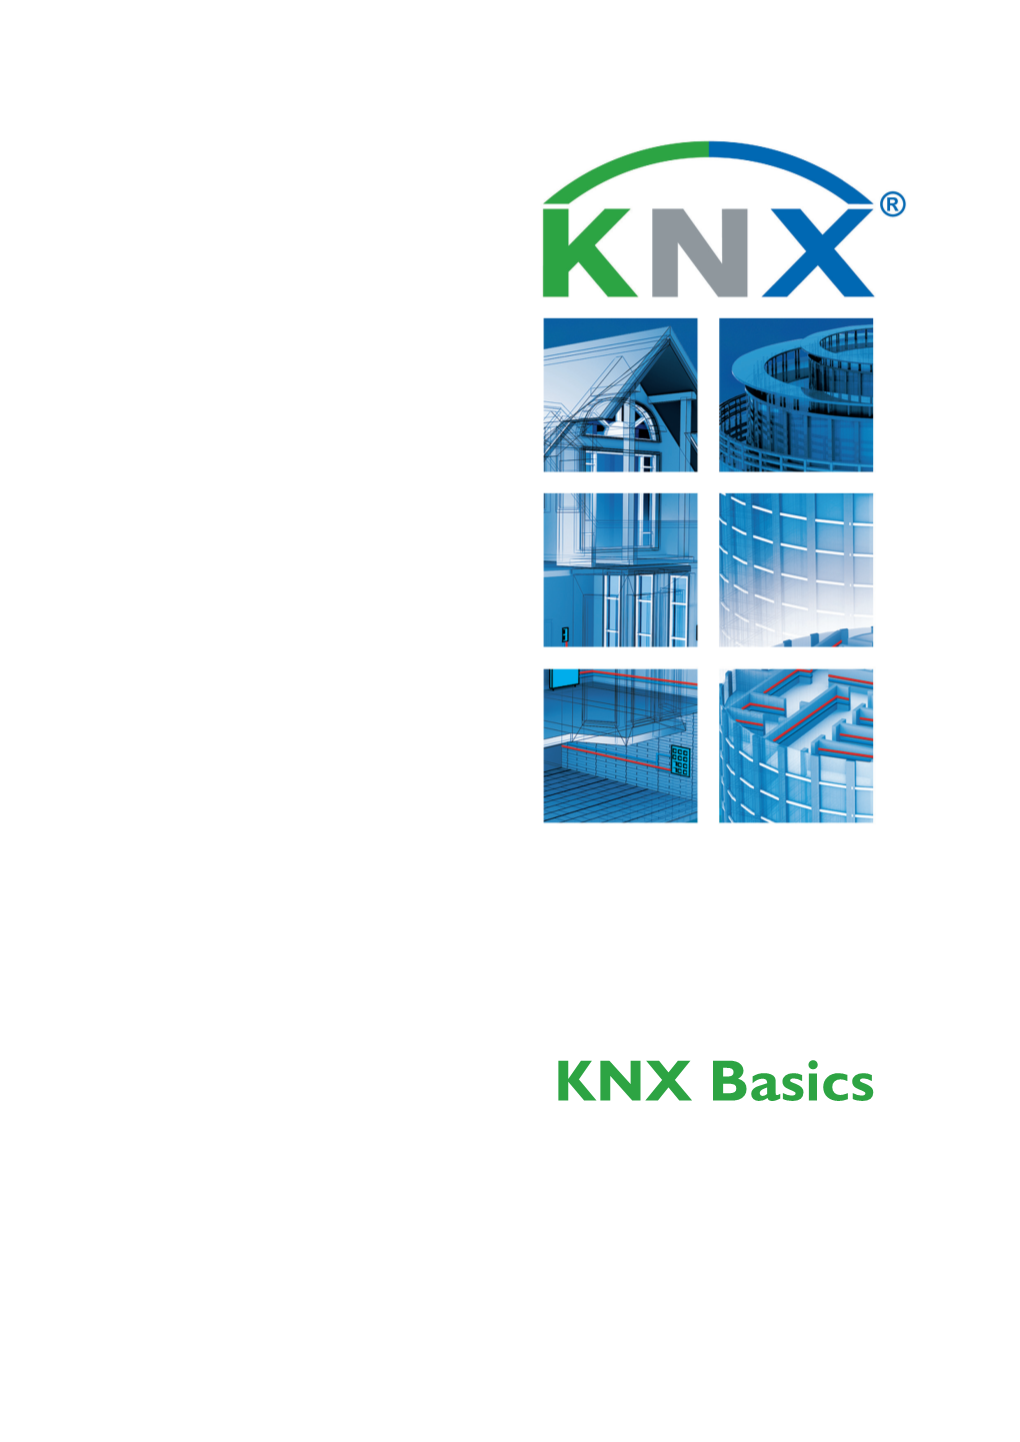 KNX Basics the KNX Standard – the Basics